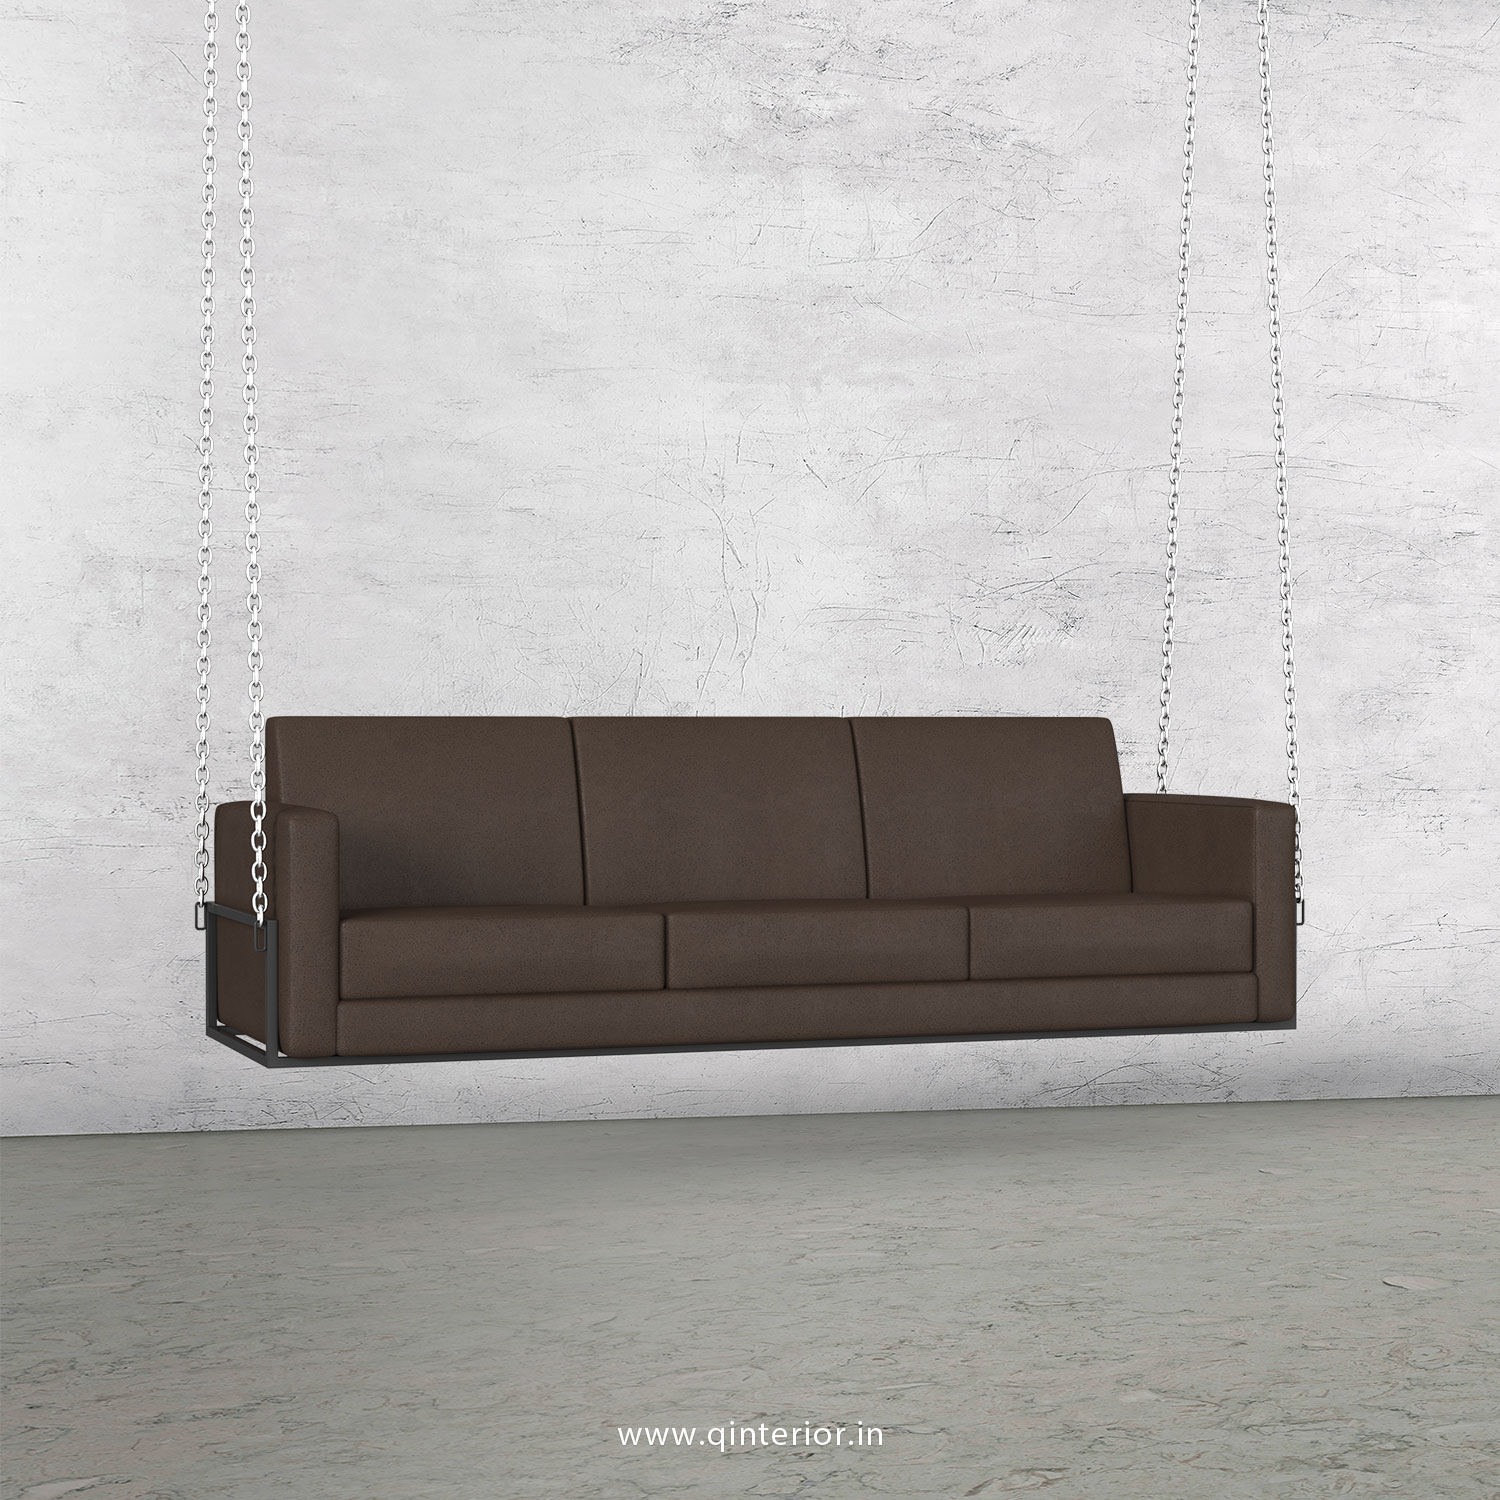 NIRVANA 3 Seater Swing Sofa in Fab Leather Fabric - SSF001 FL16